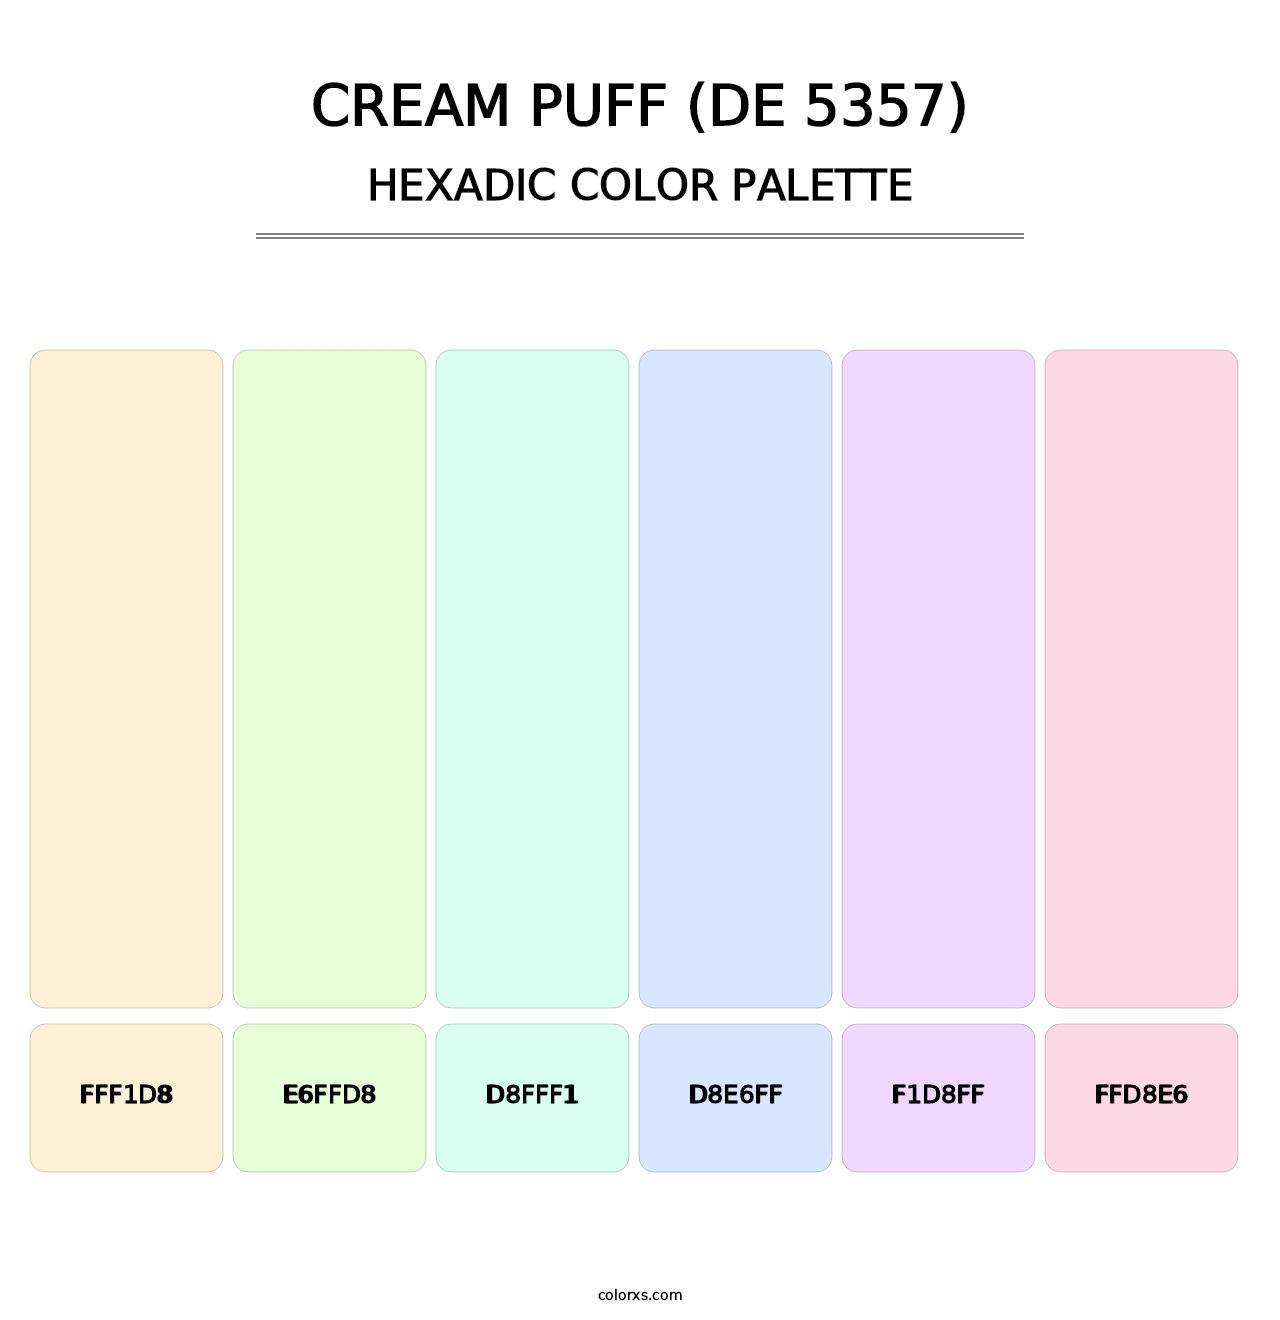 Cream Puff (DE 5357) - Hexadic Color Palette